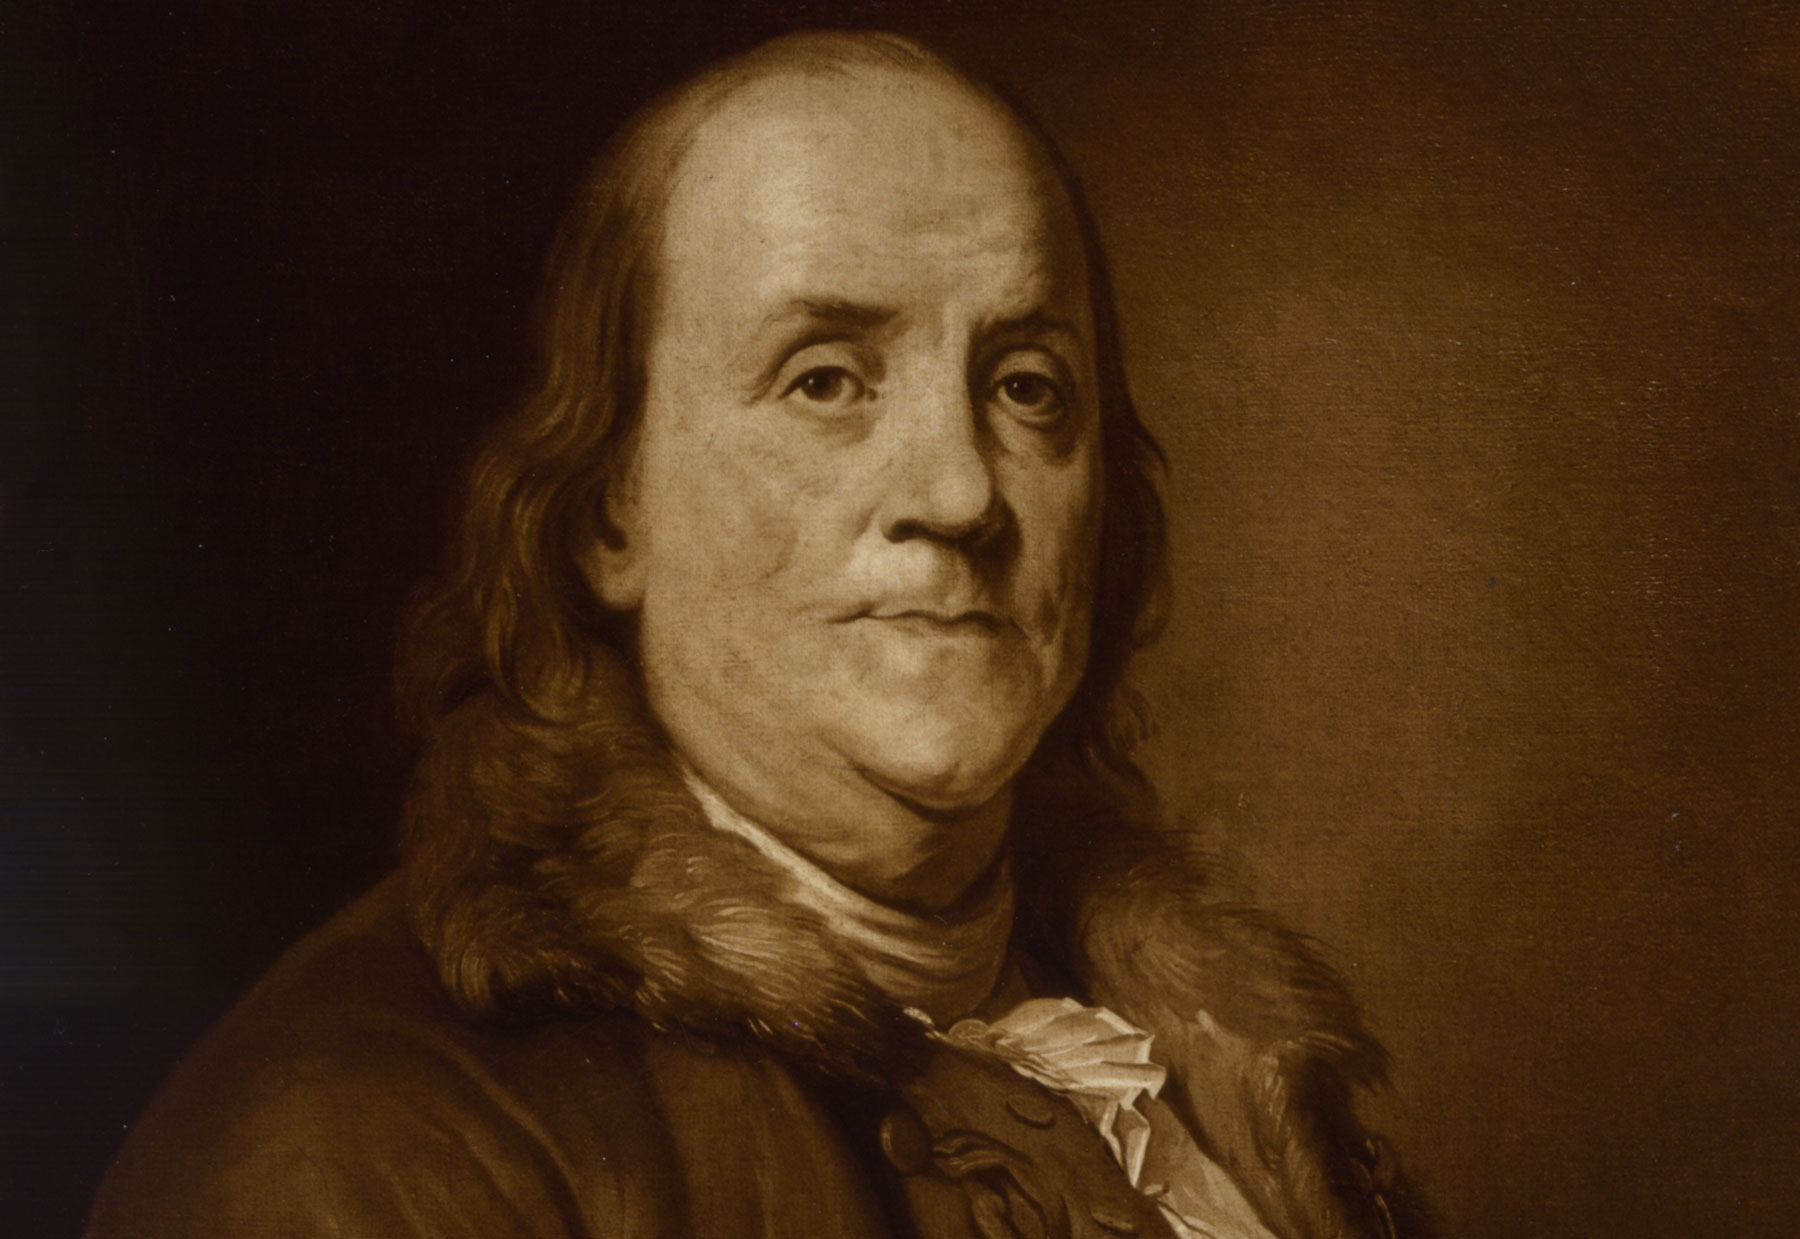 Ben Franklin Had Bodies In His Basement